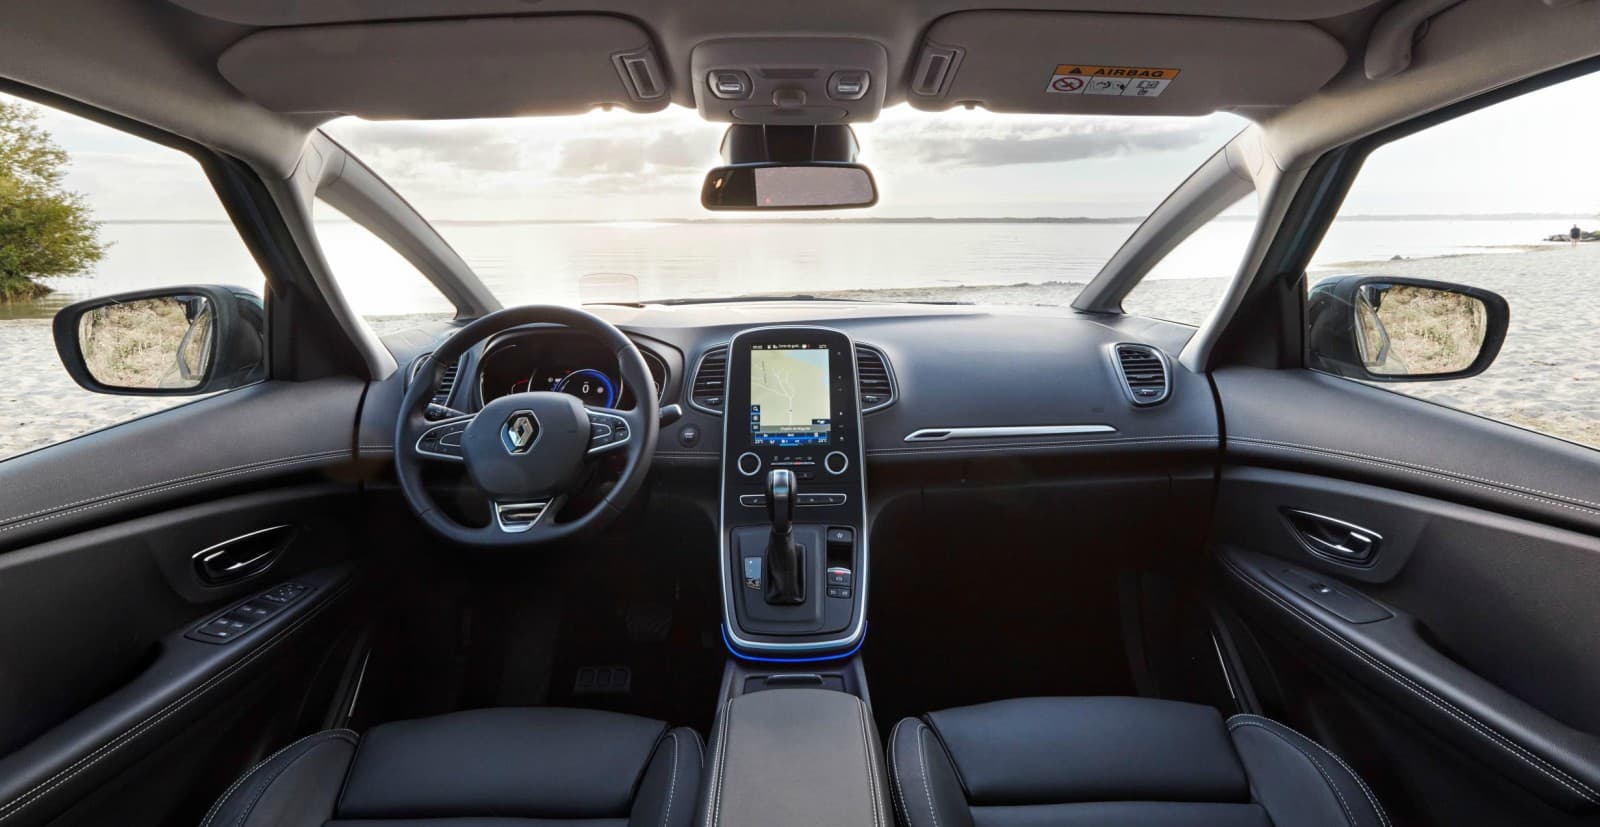 Renault Scenic interior - Cockpit